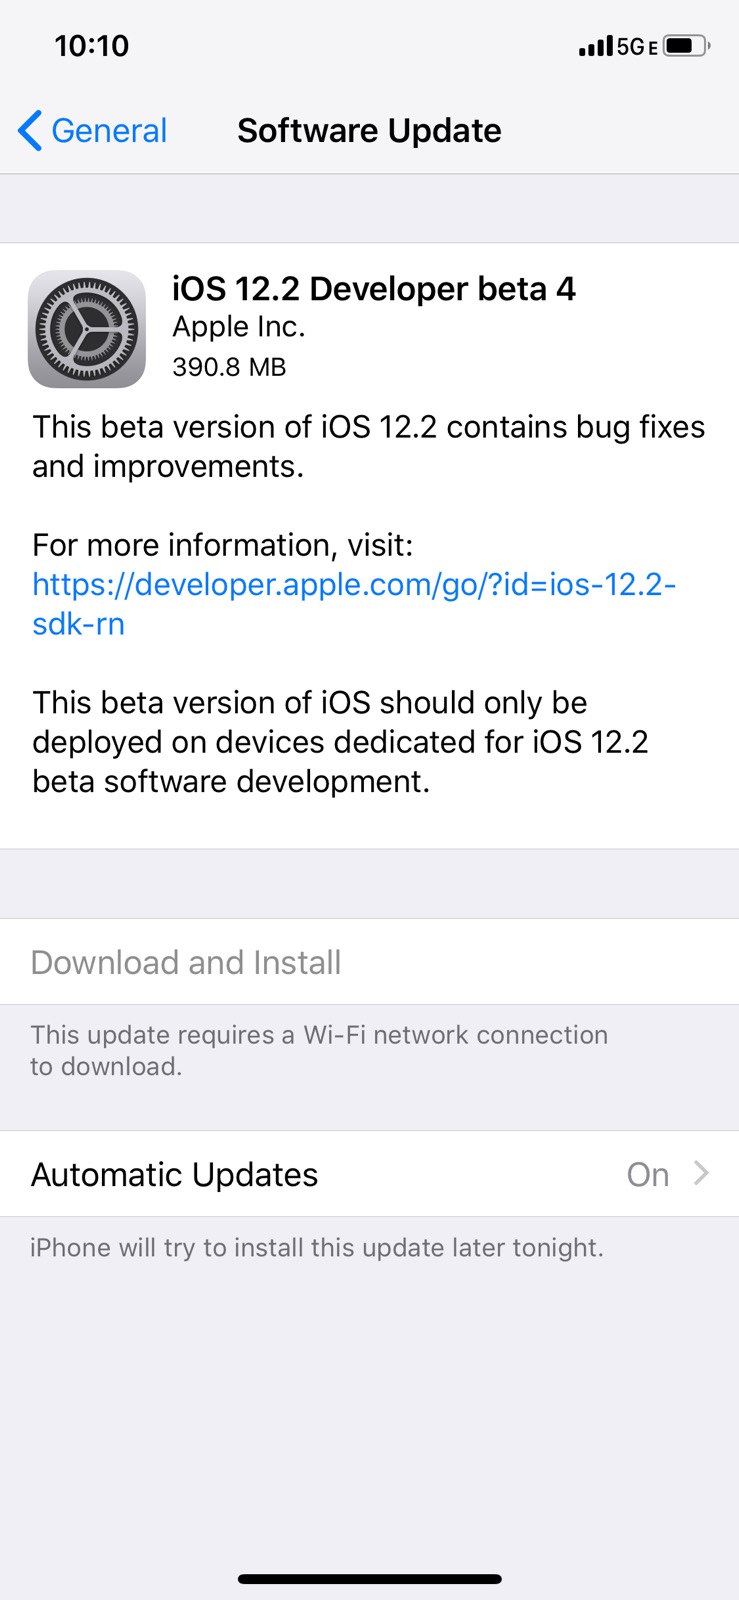 Apple Releases iOS 12.2 Beta 4 [Download]